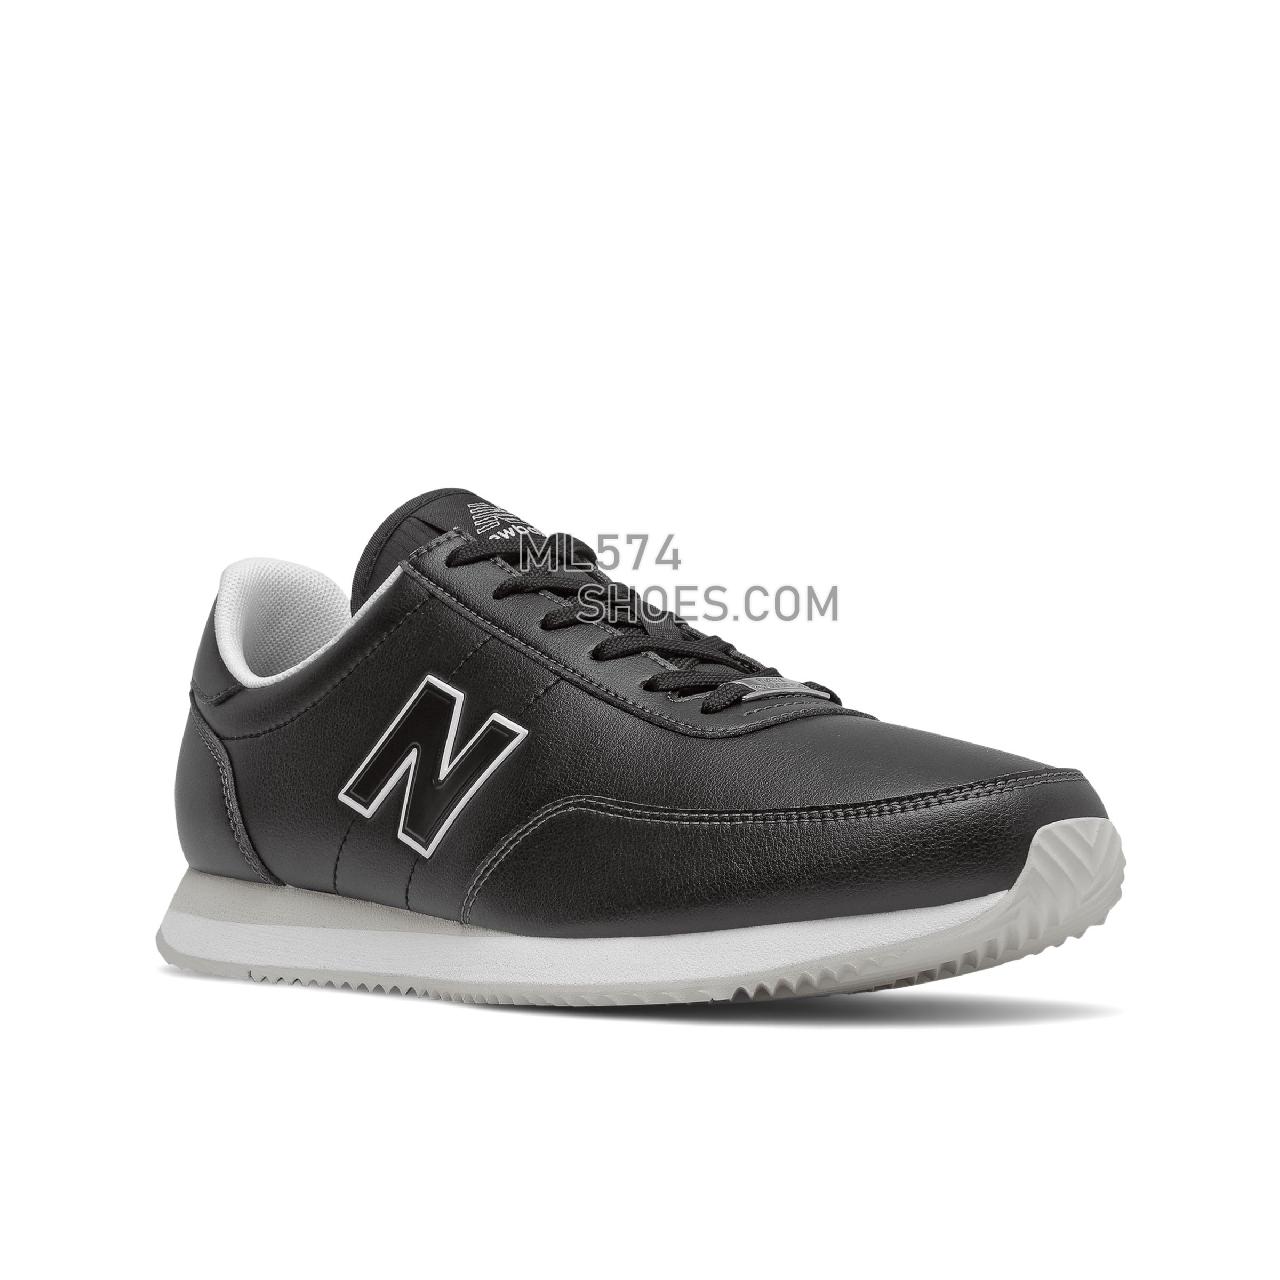 New Balance UL720V1 - Unisex Men's Women's Classic Sneakers - Black with Nb White - UL720WK1